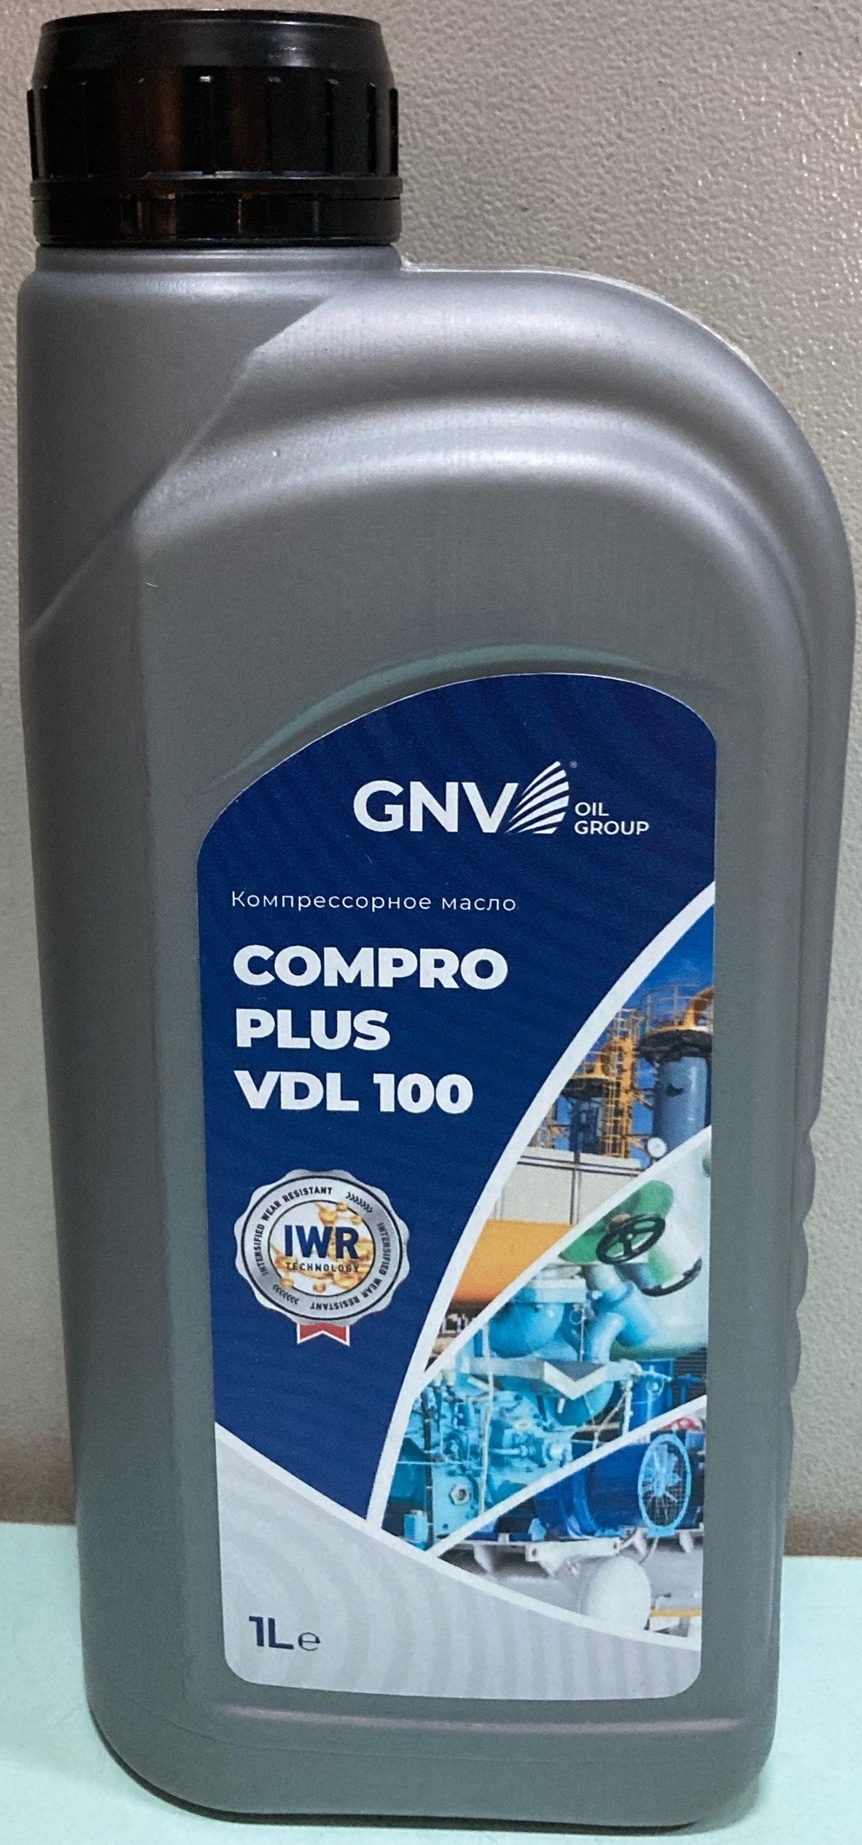 GNV Compro plus VDL 100 (кан 1 л.) Компрессорное масло DACNIS  100